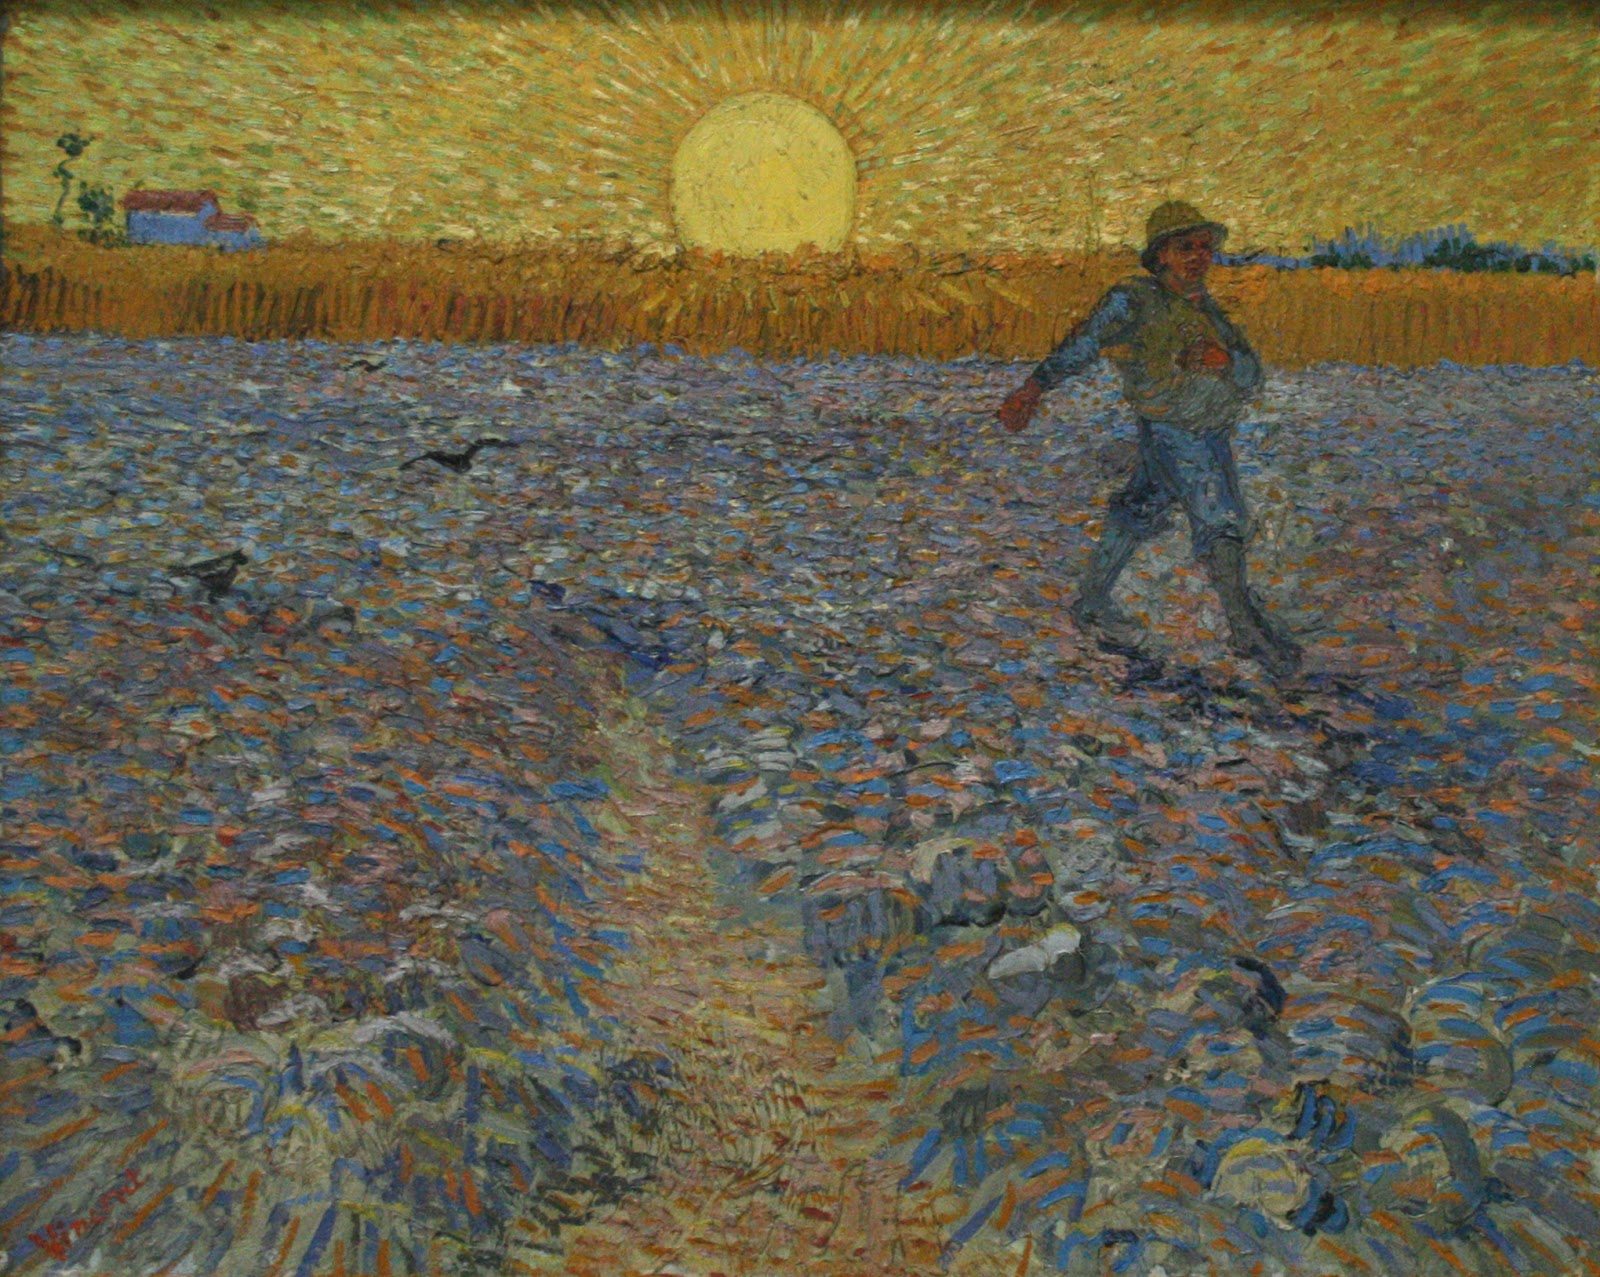 Vincent+Van+Gogh-1853-1890 (811).jpg